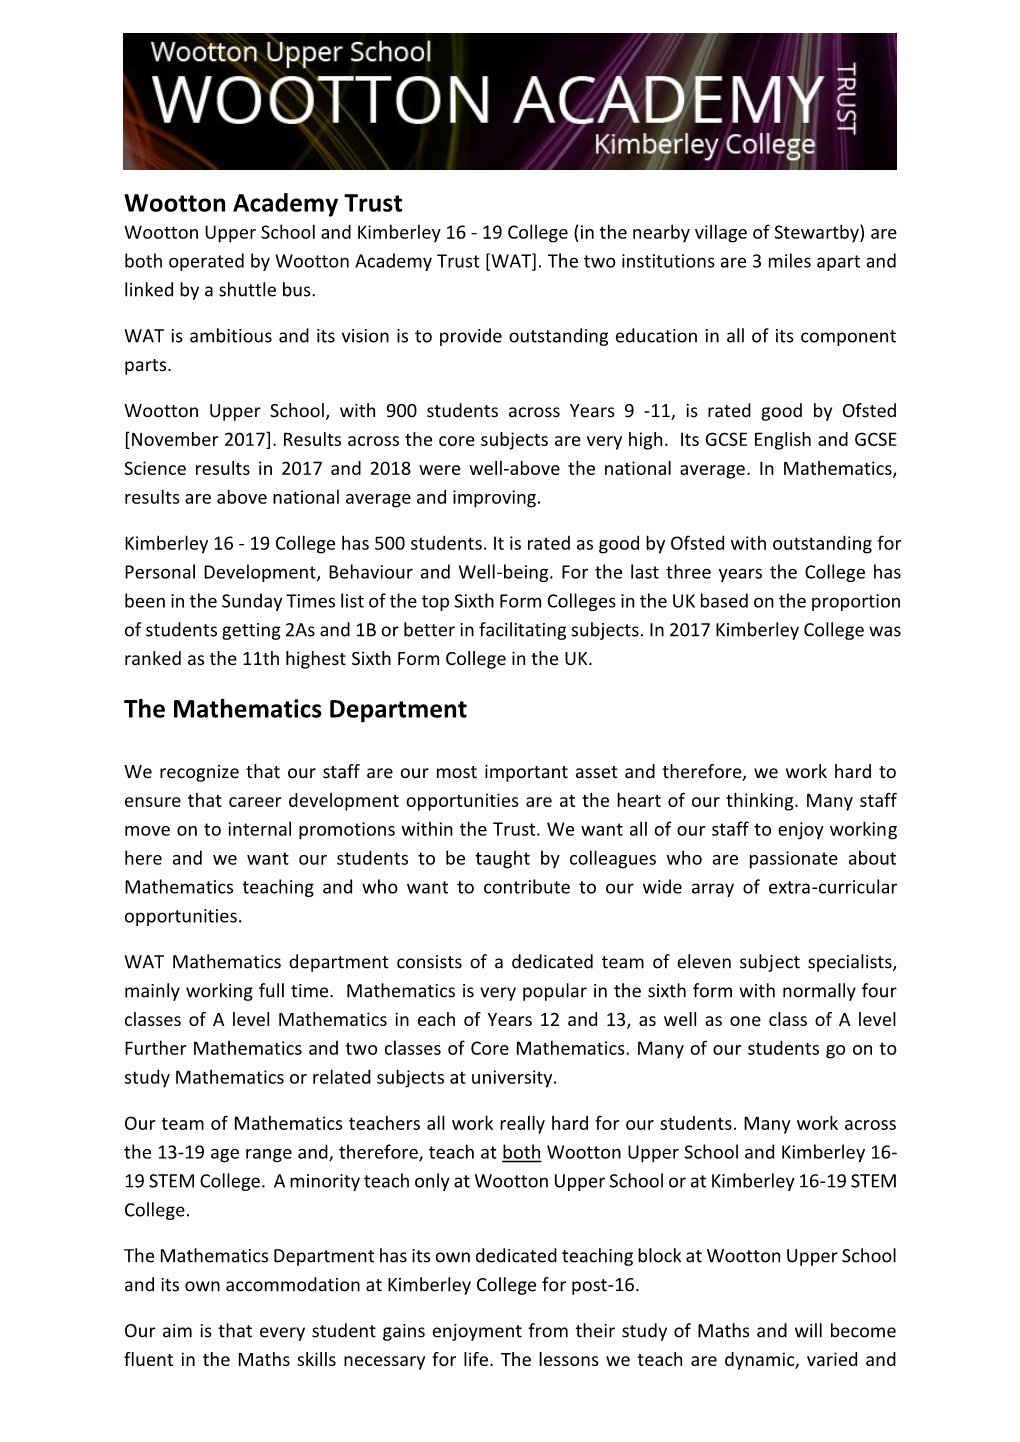 Wootton Academy Trust the Mathematics Department